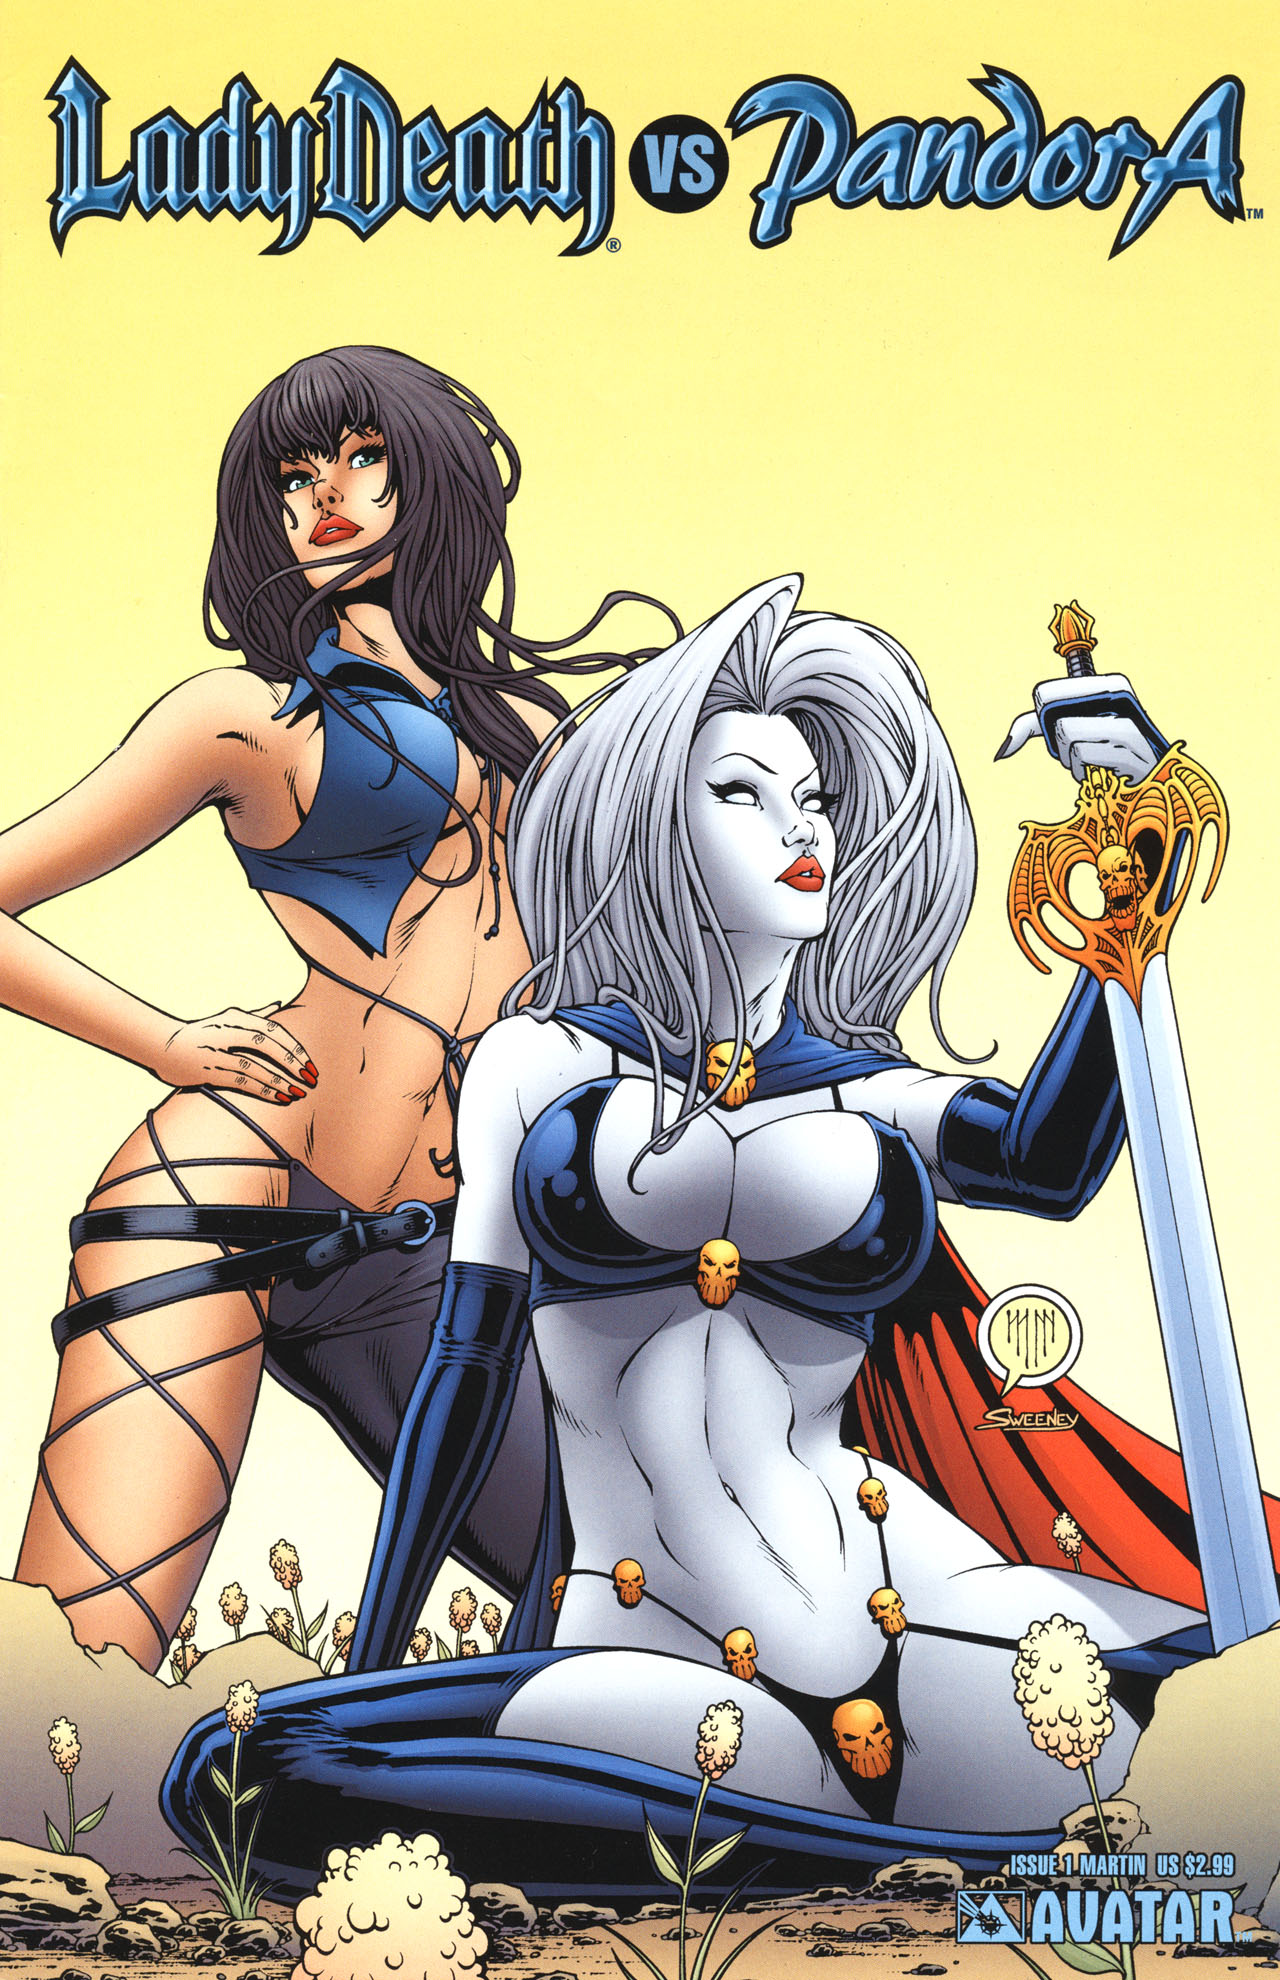 Read online Lady Death vs. Pandora comic -  Issue # Full - 6